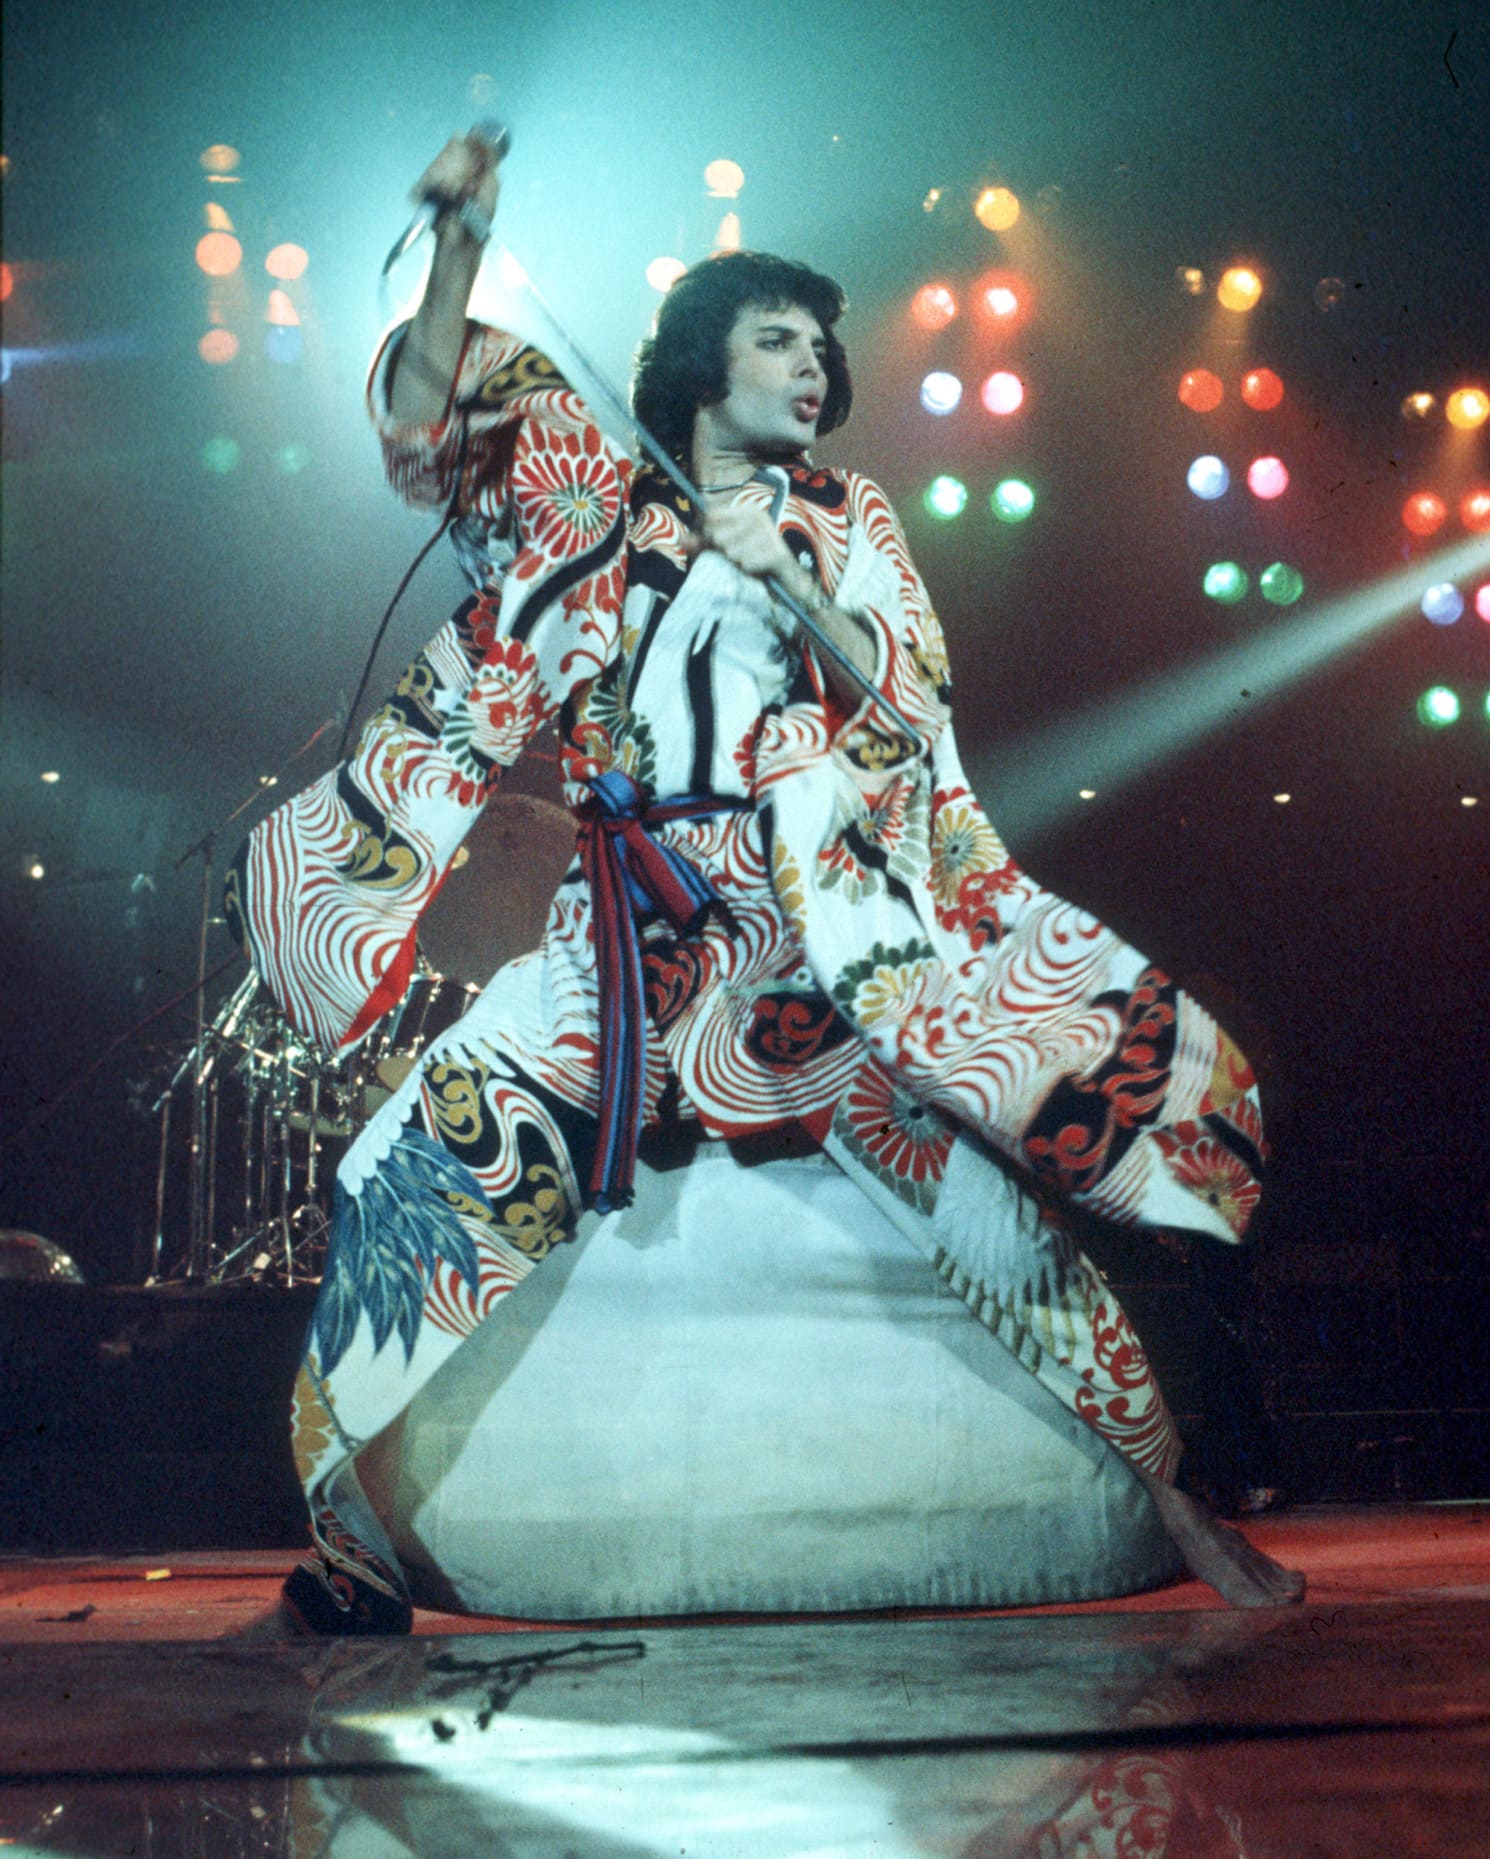 Freddie Mercury 在日本之旅中穿着和服